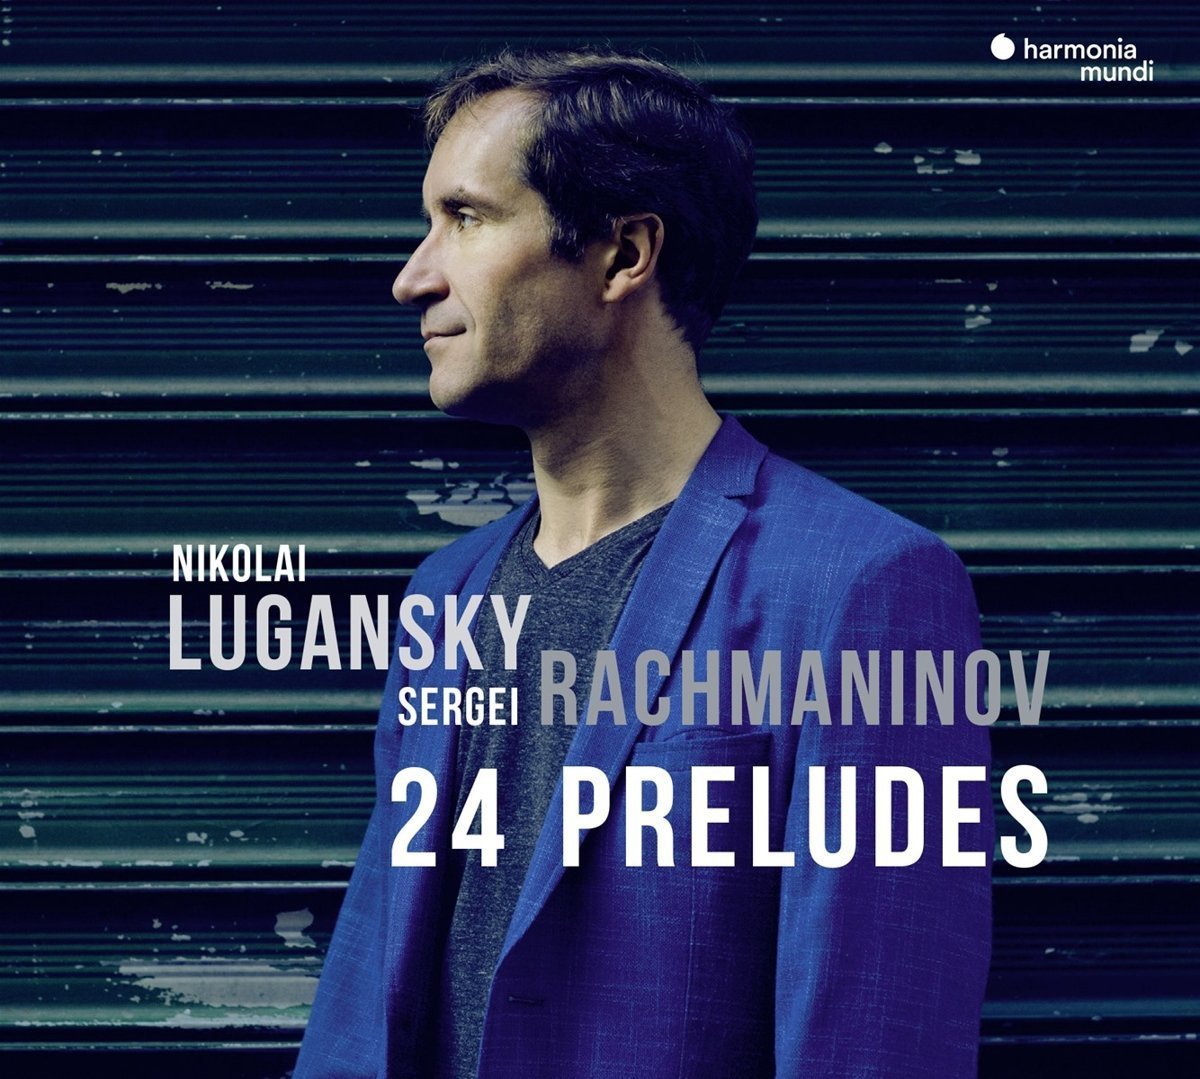 Lugansky's Rachmaninov Preludes recording